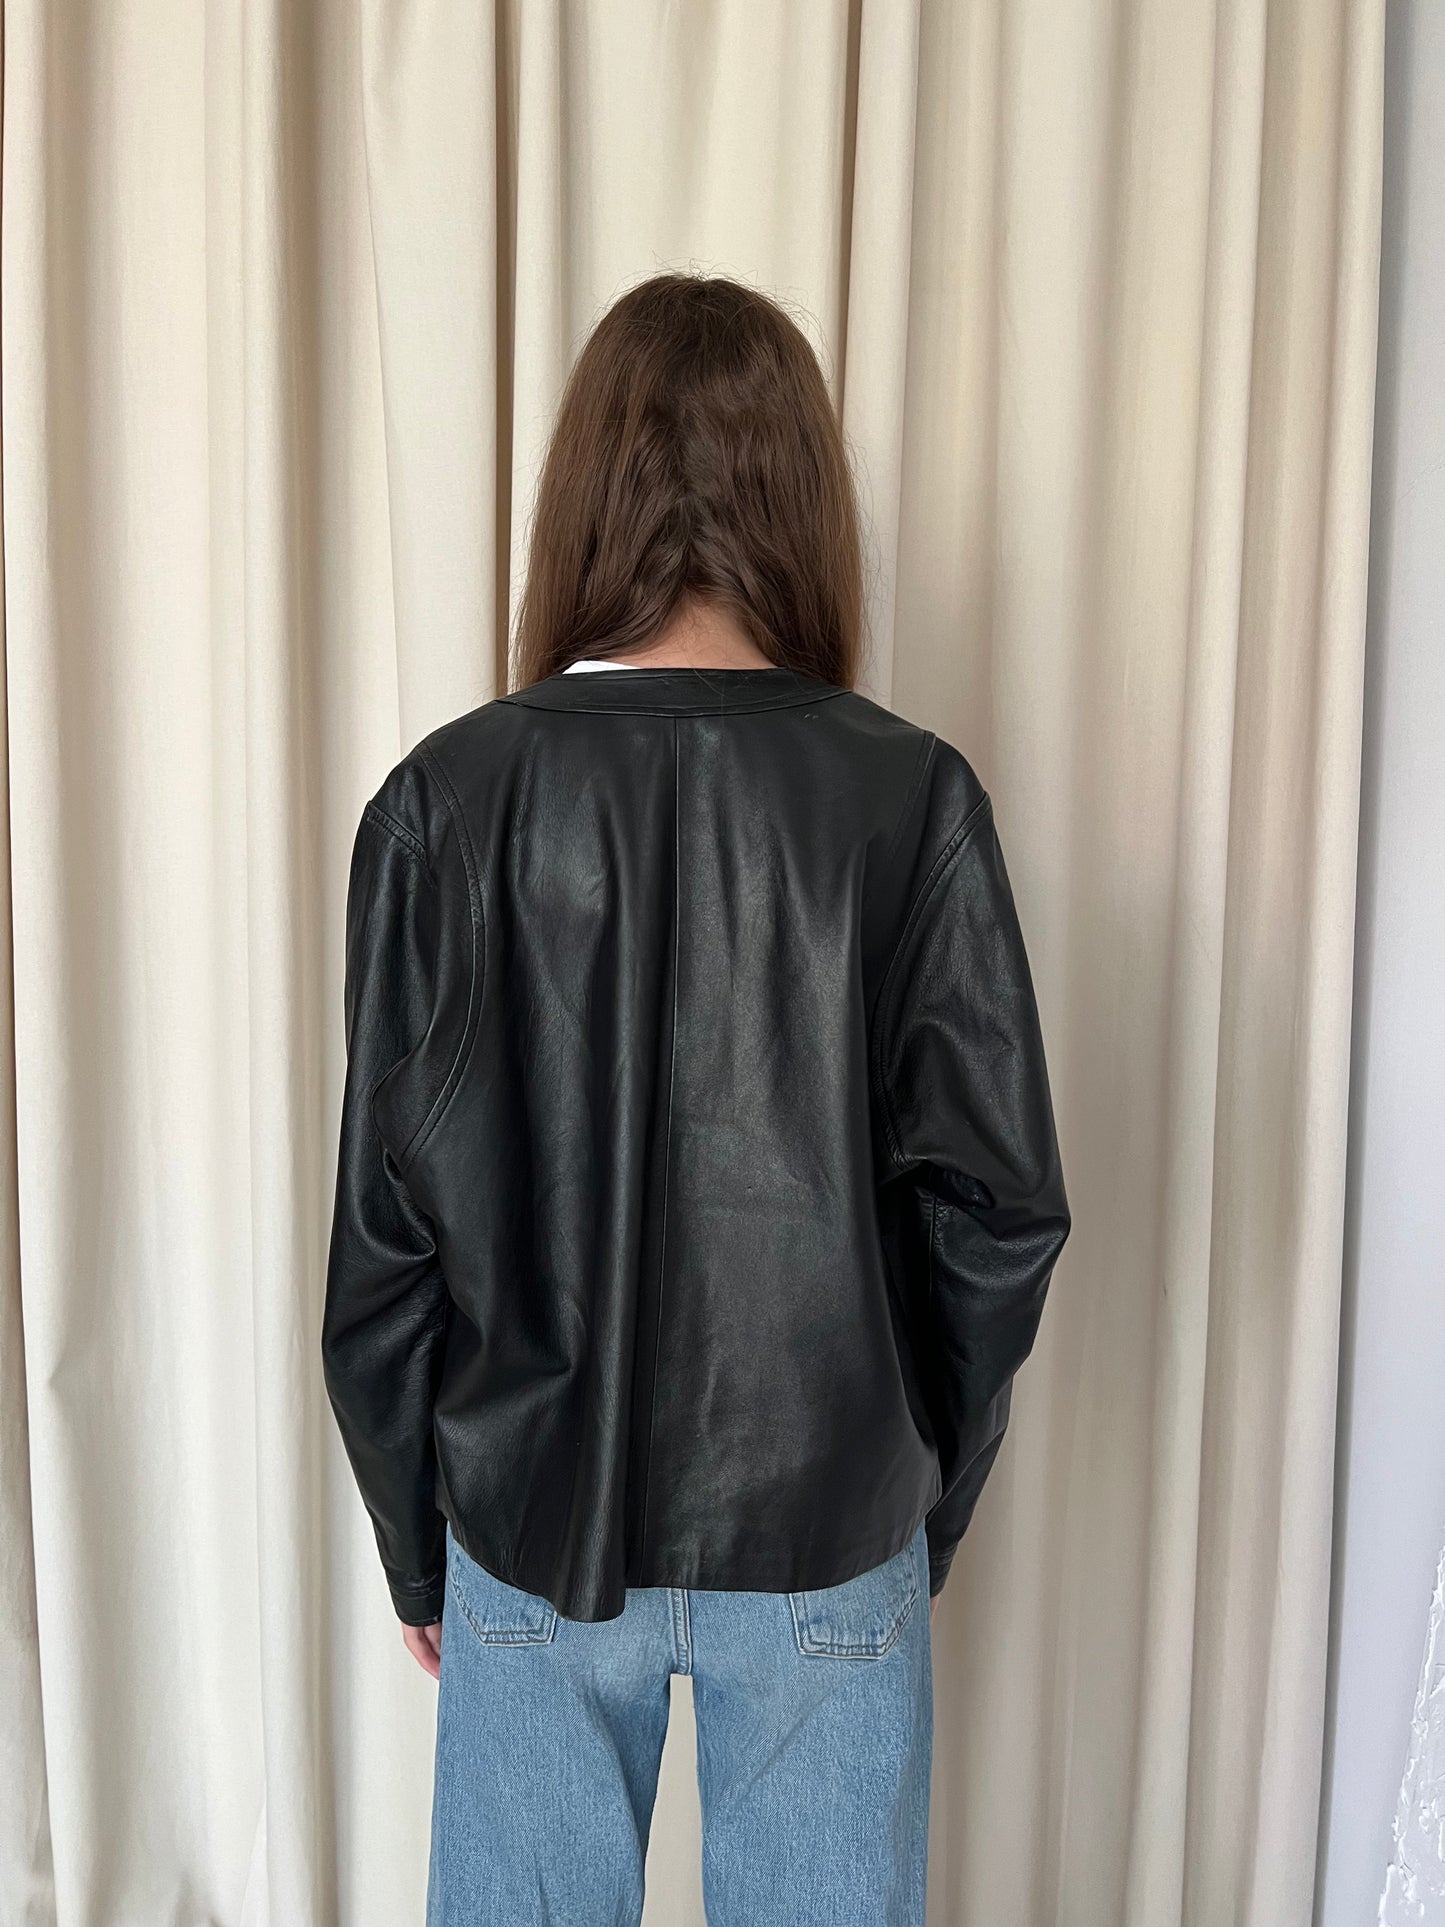 Natural leather jacket